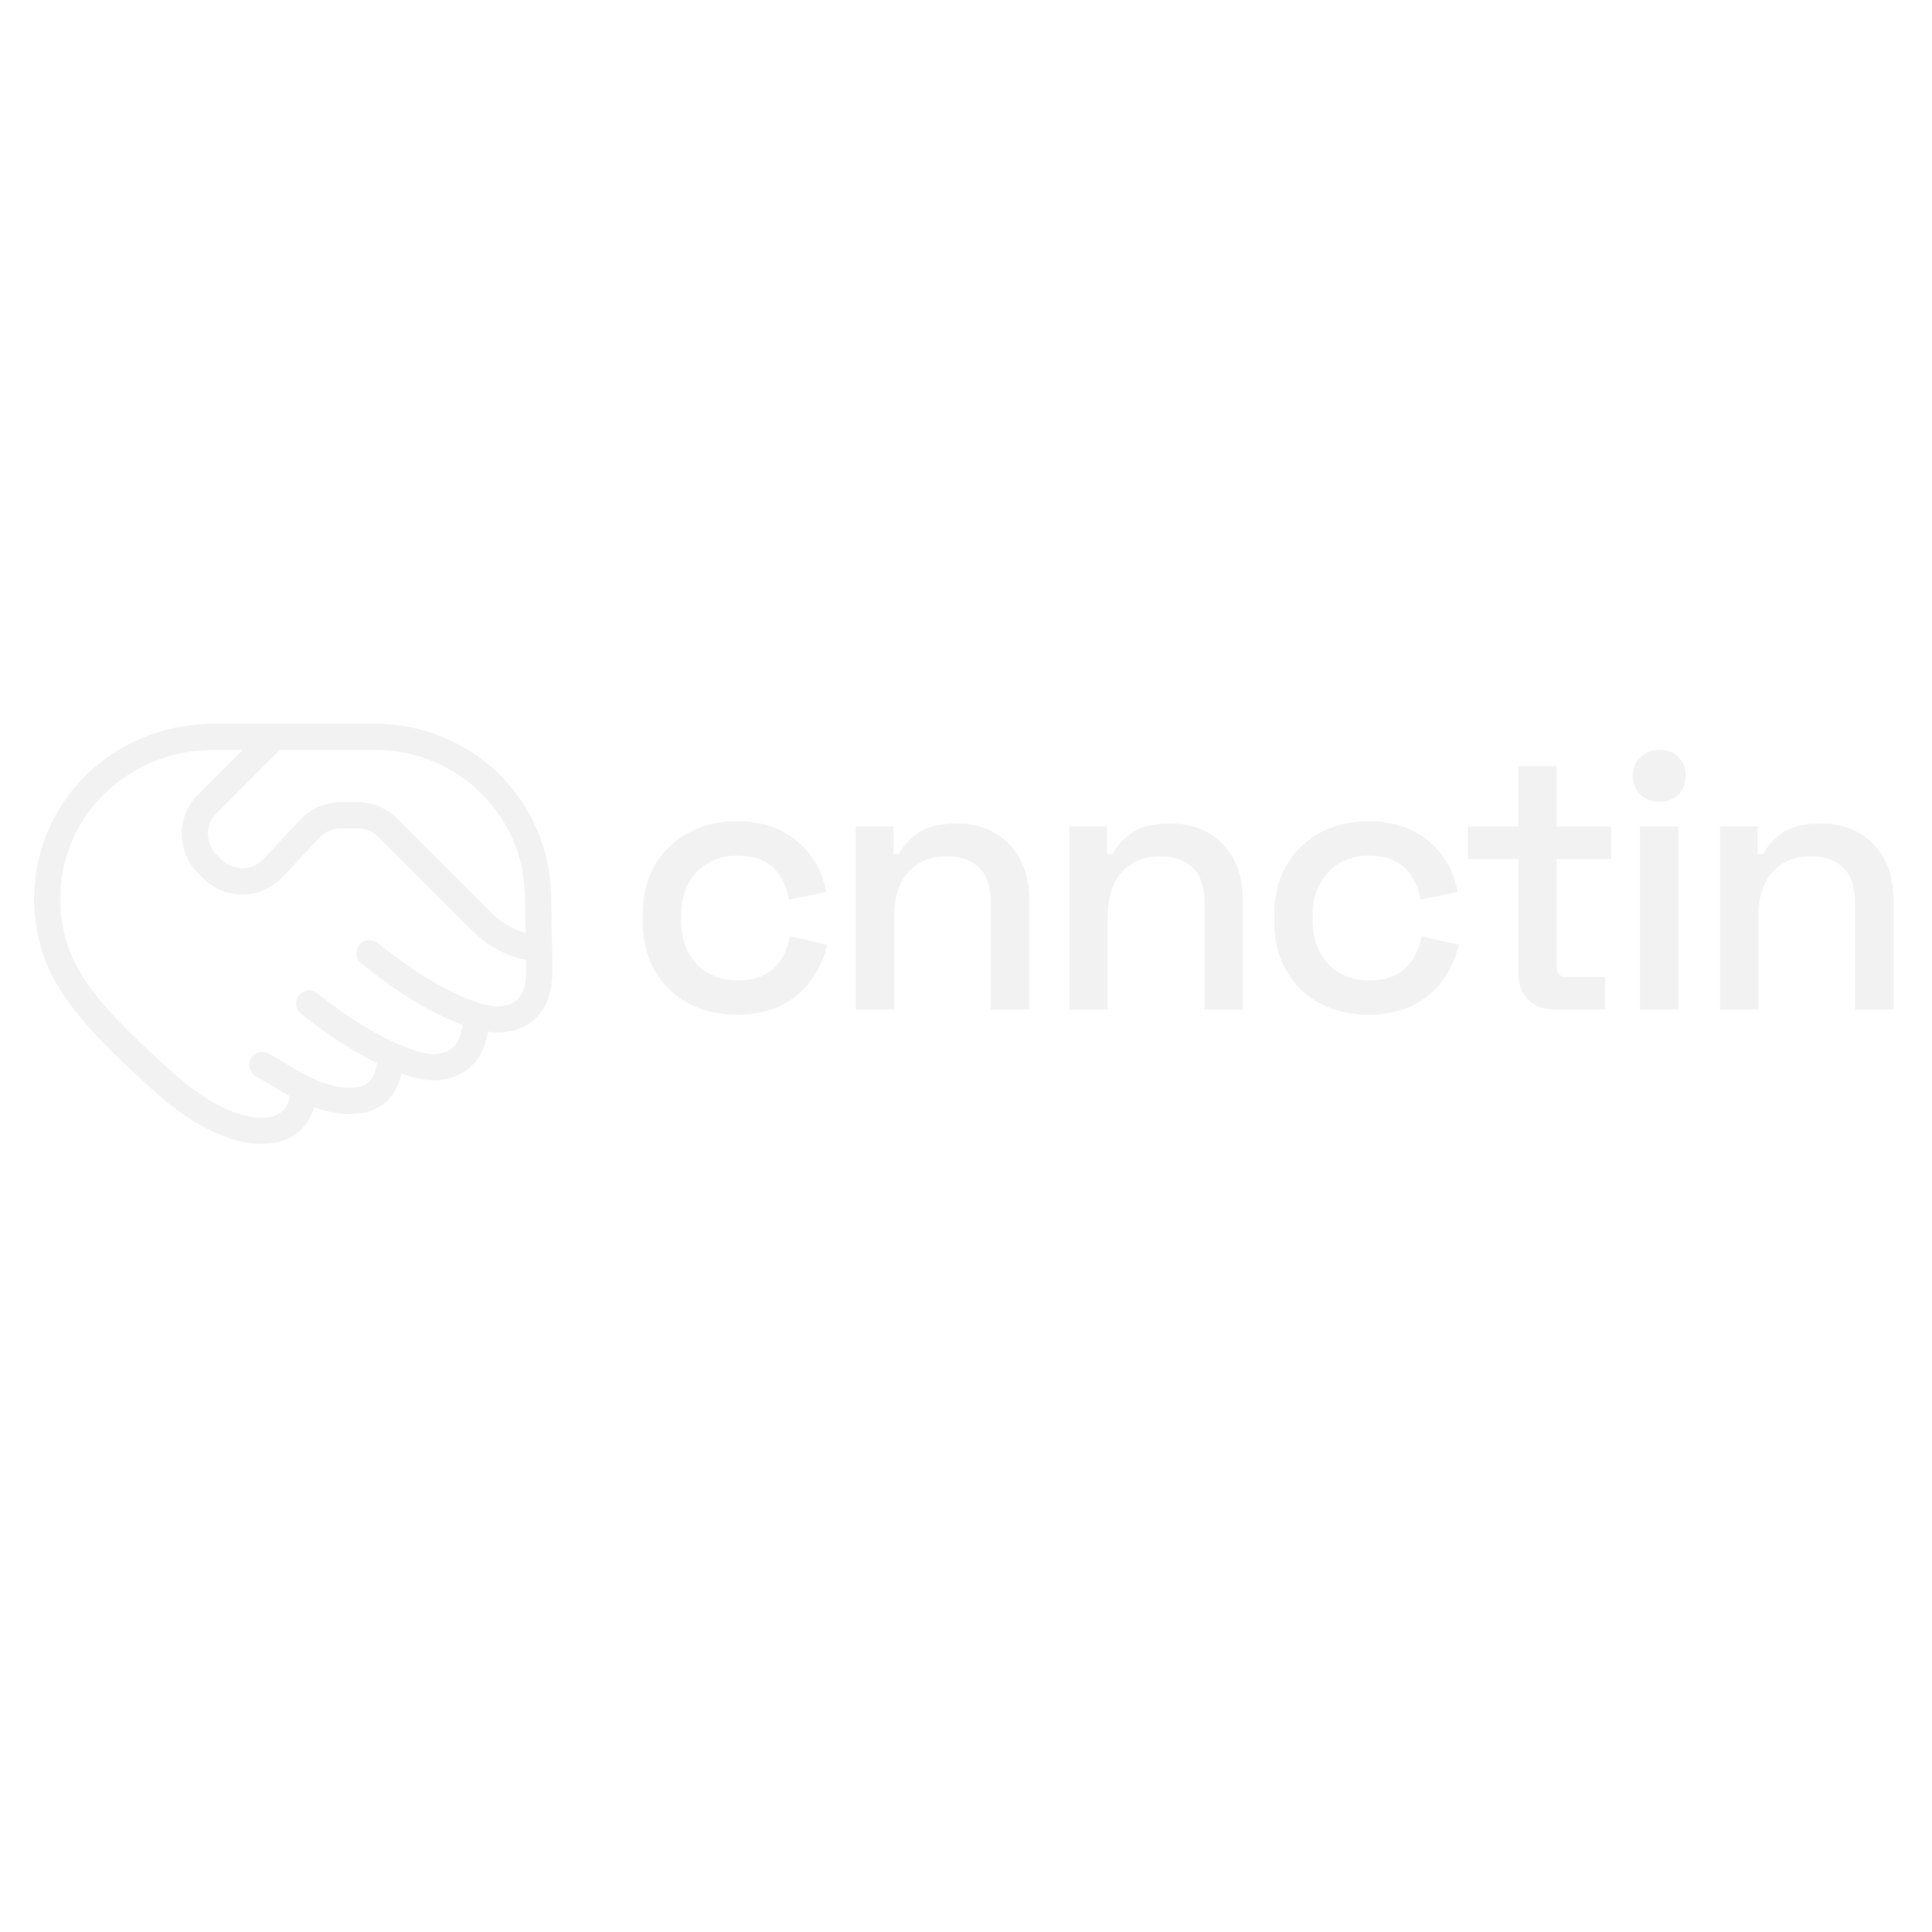 cnnctin